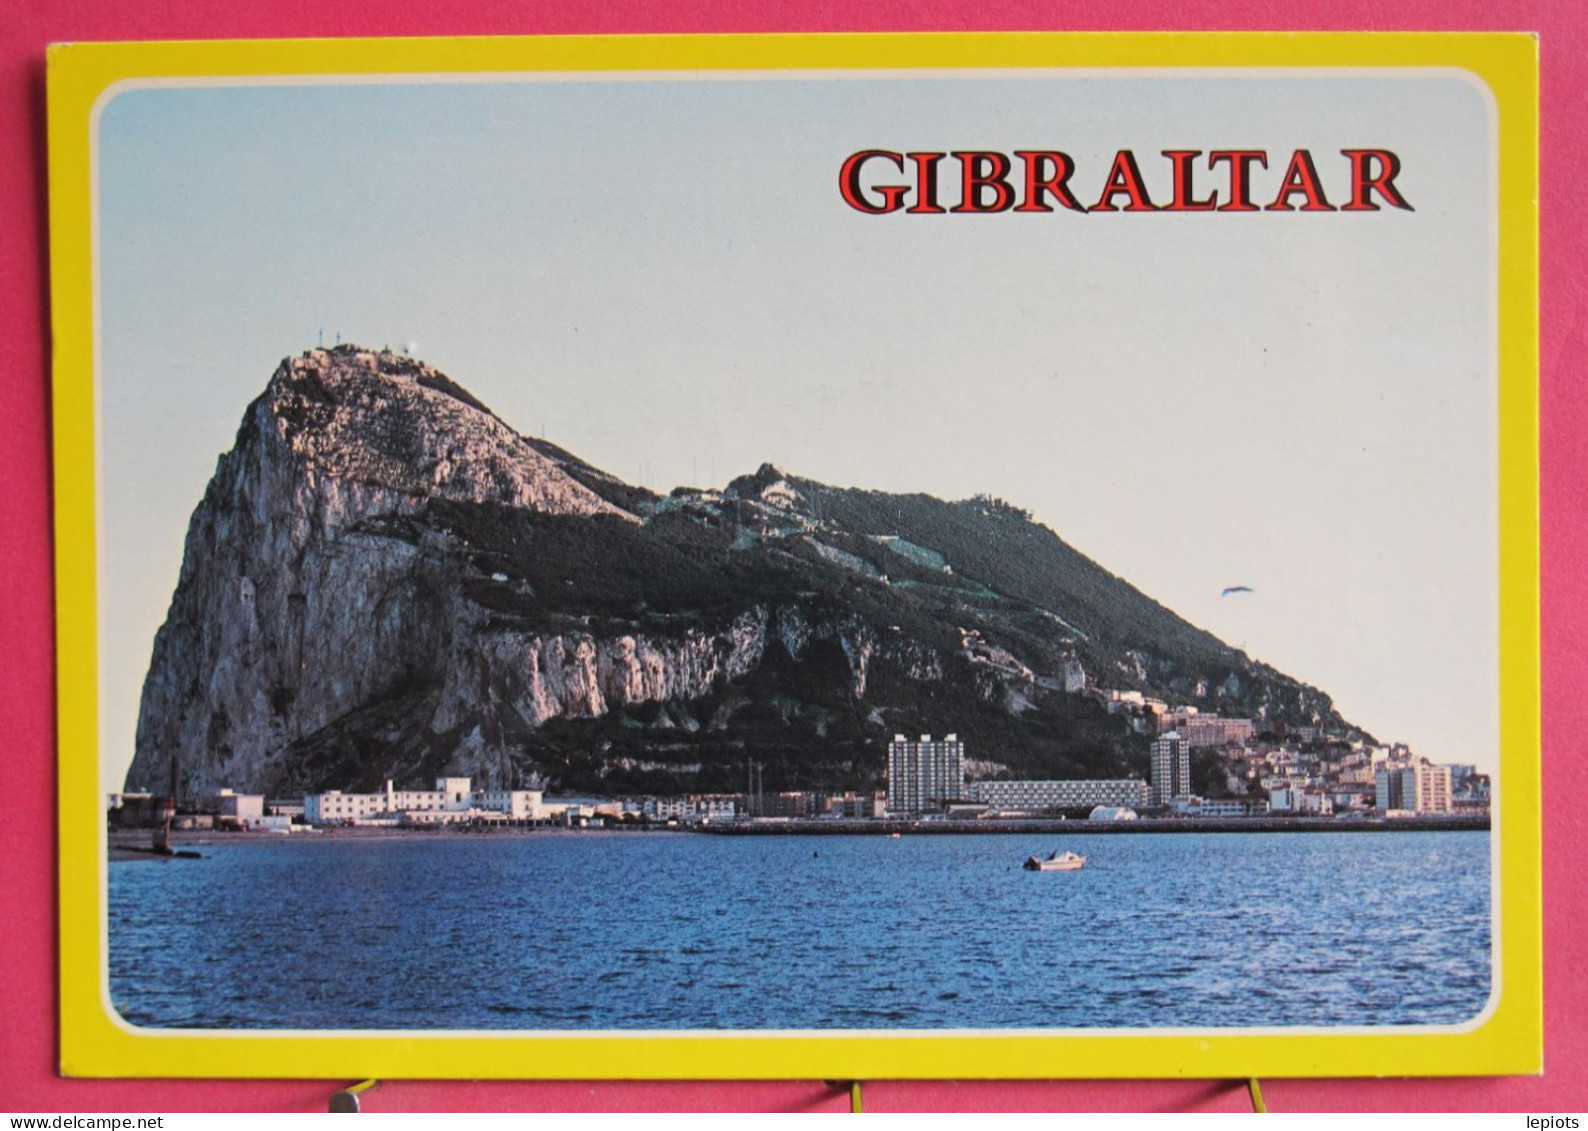 Gibraltar - Rock From Spanish Mainland - Gibraltar